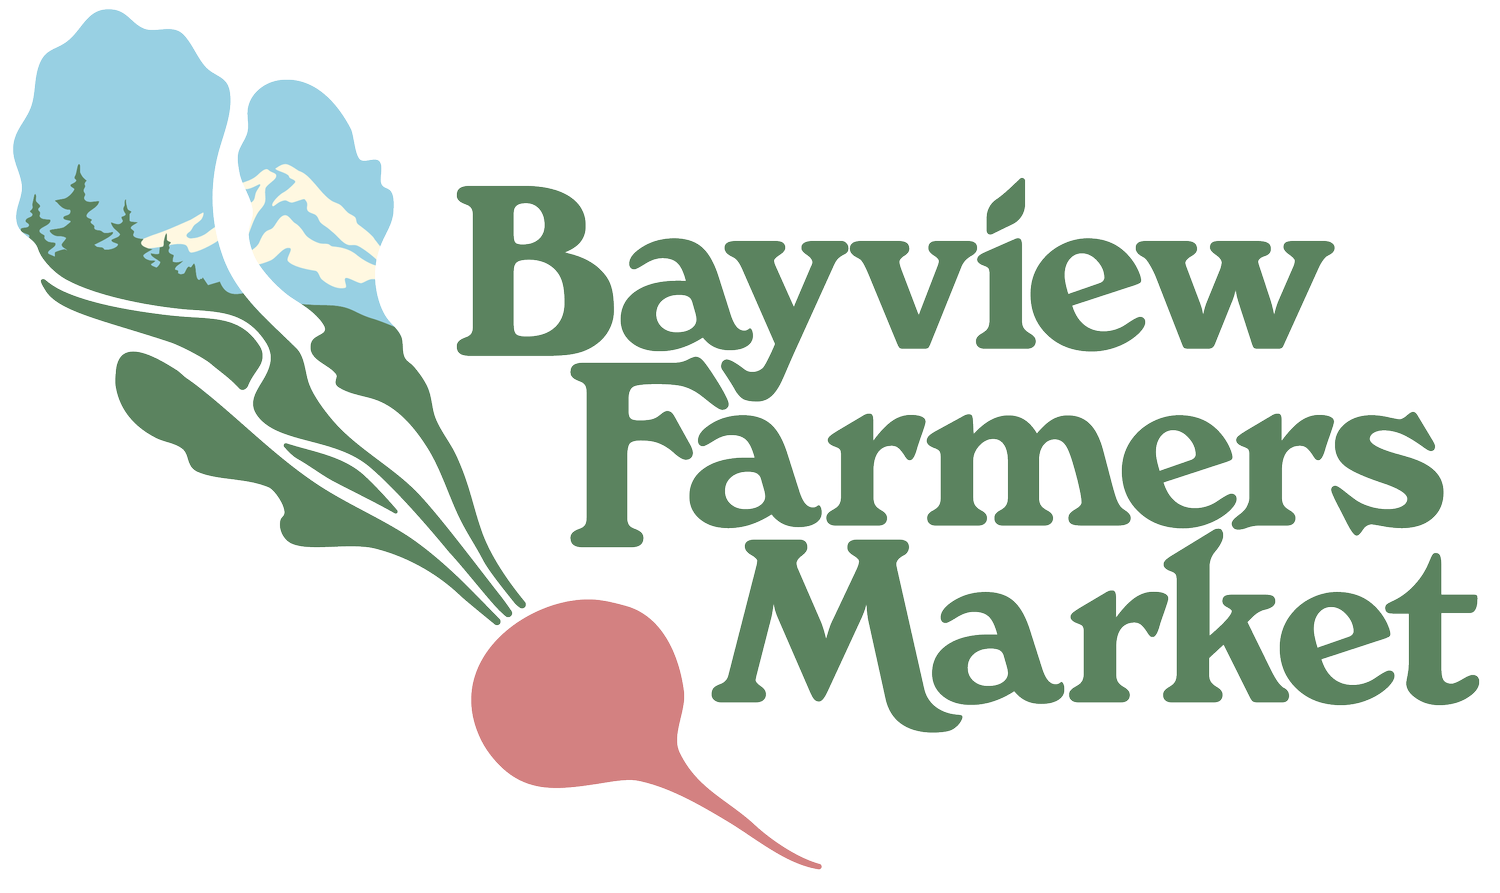 Bayview Farmers Market